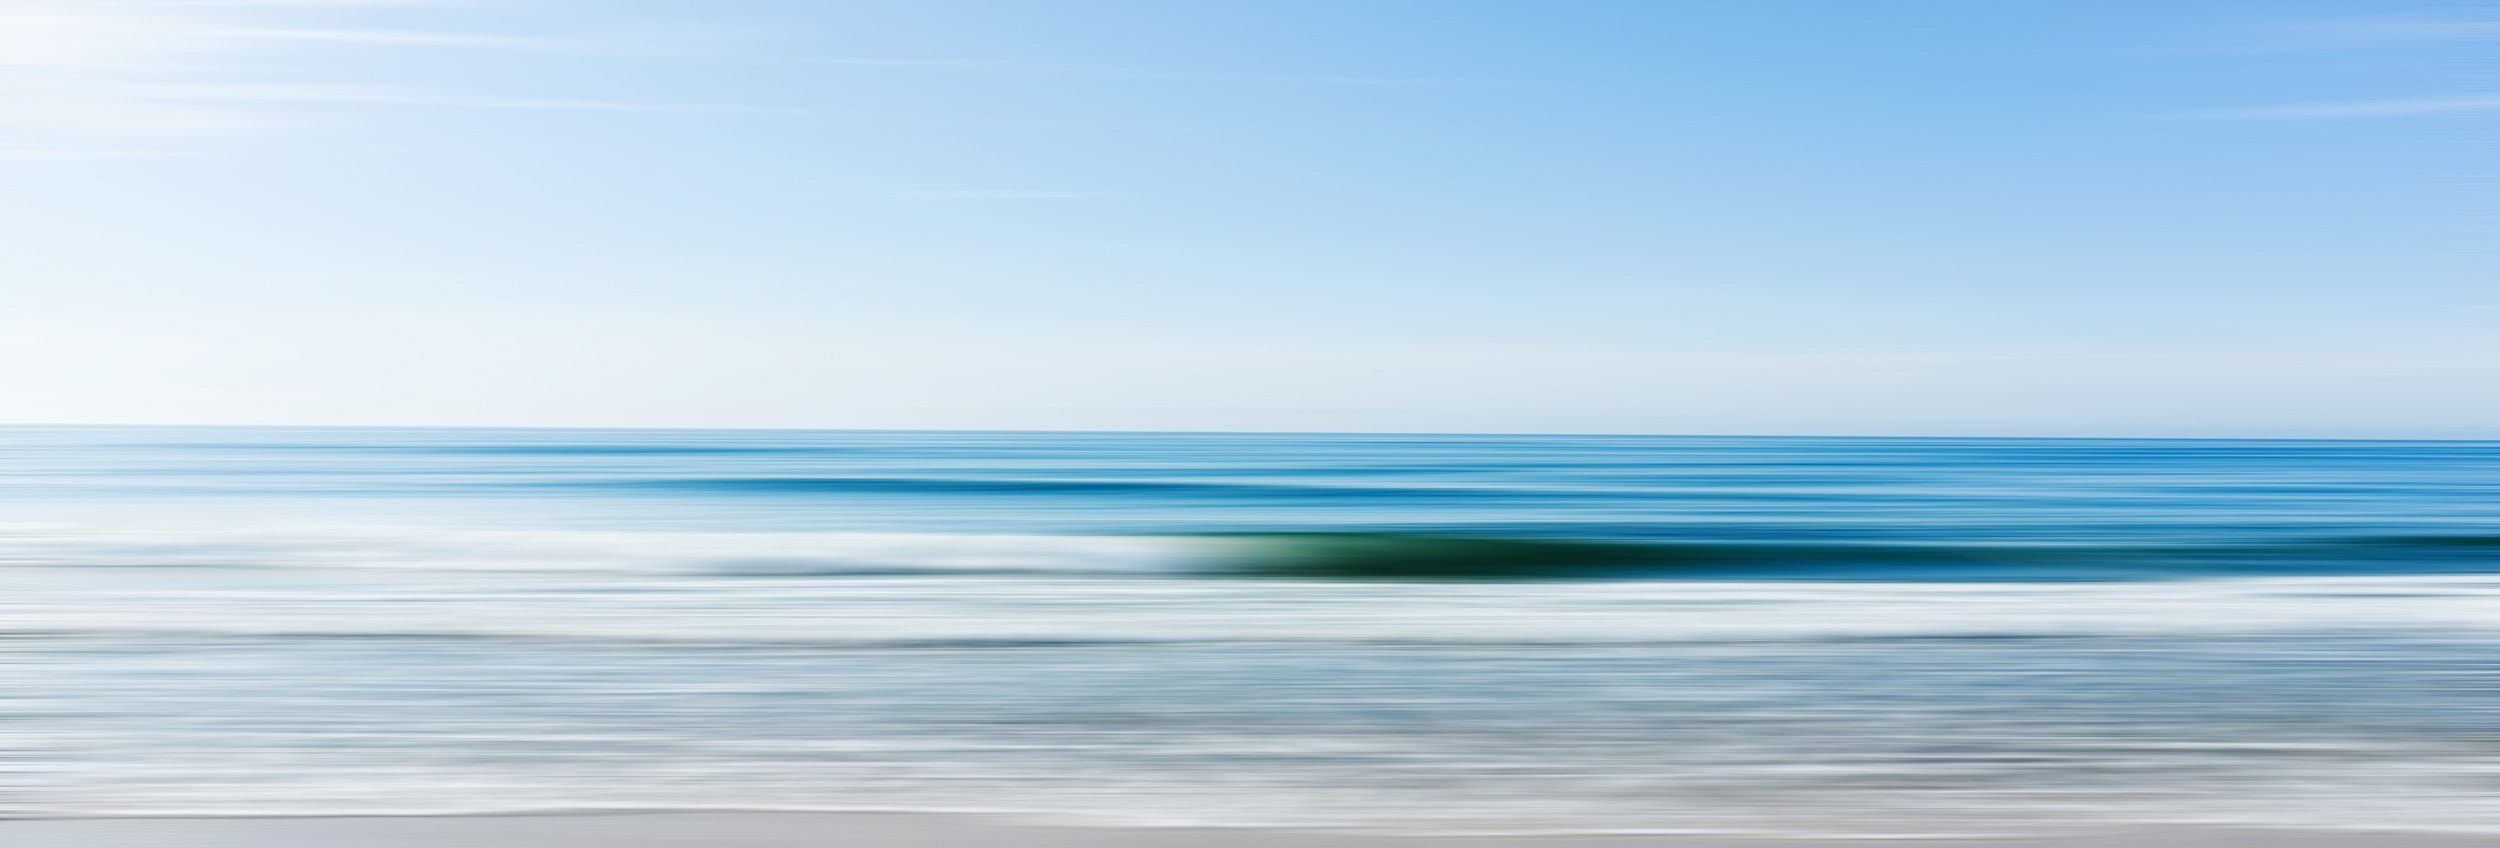 Jaime Lopez, Sagg Main Beach Dream, 2 Photograph on matte aluminum, 35 x 72.5 inches, $5500